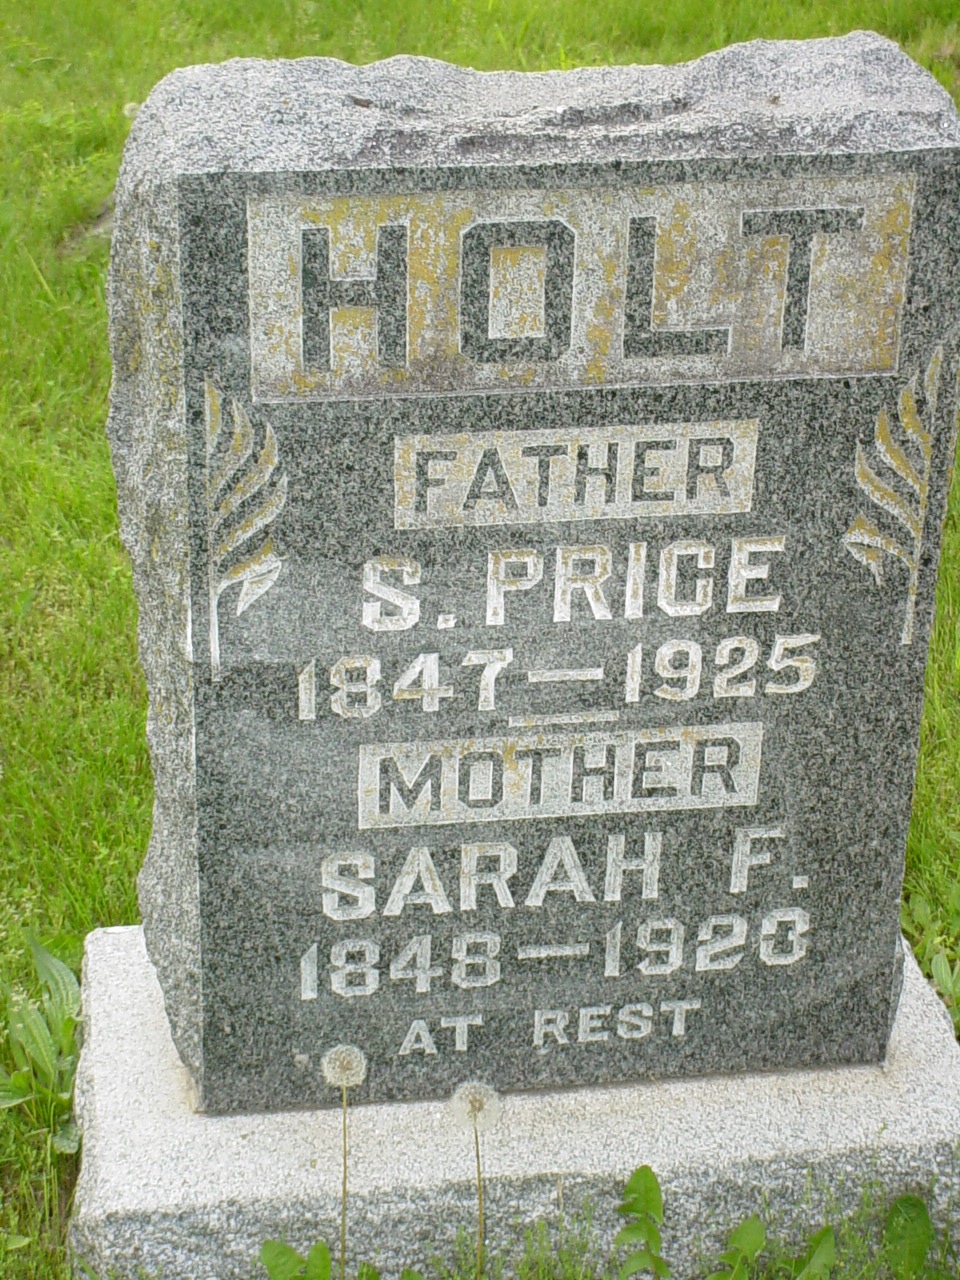  Sterling P. Holt & Sarah F. Vaughn